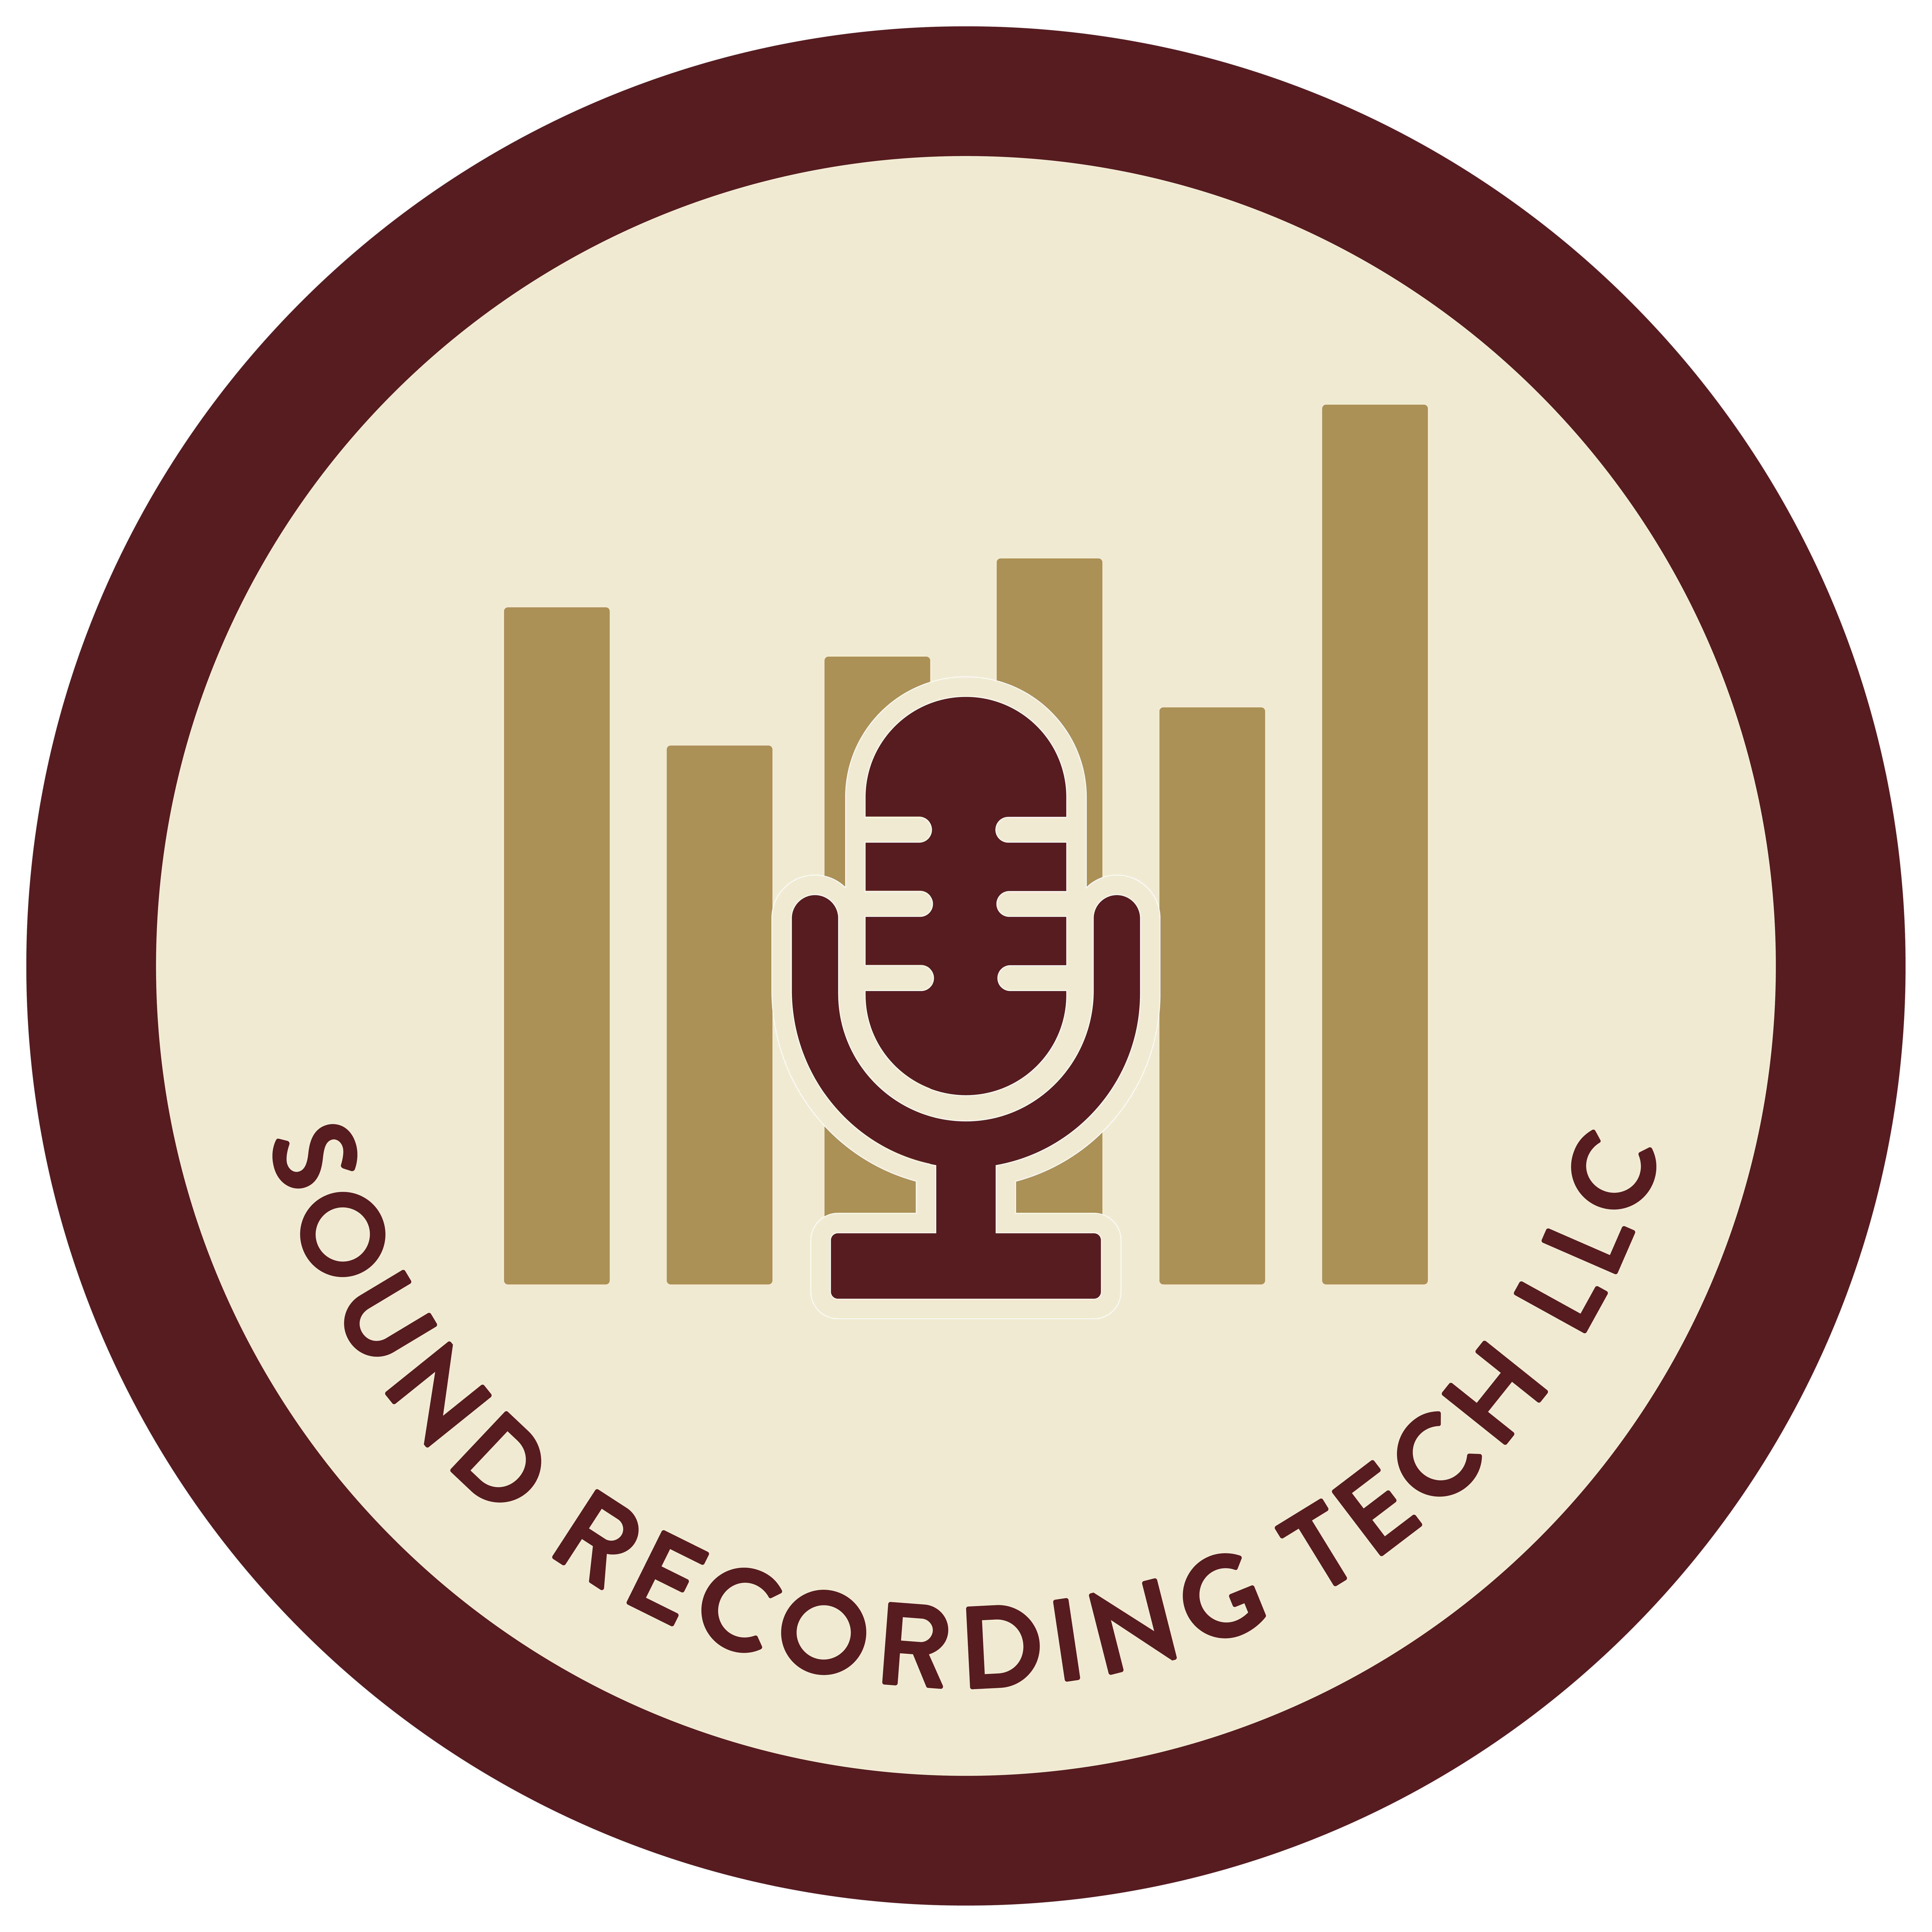 Sound Recording Technology LLC icon